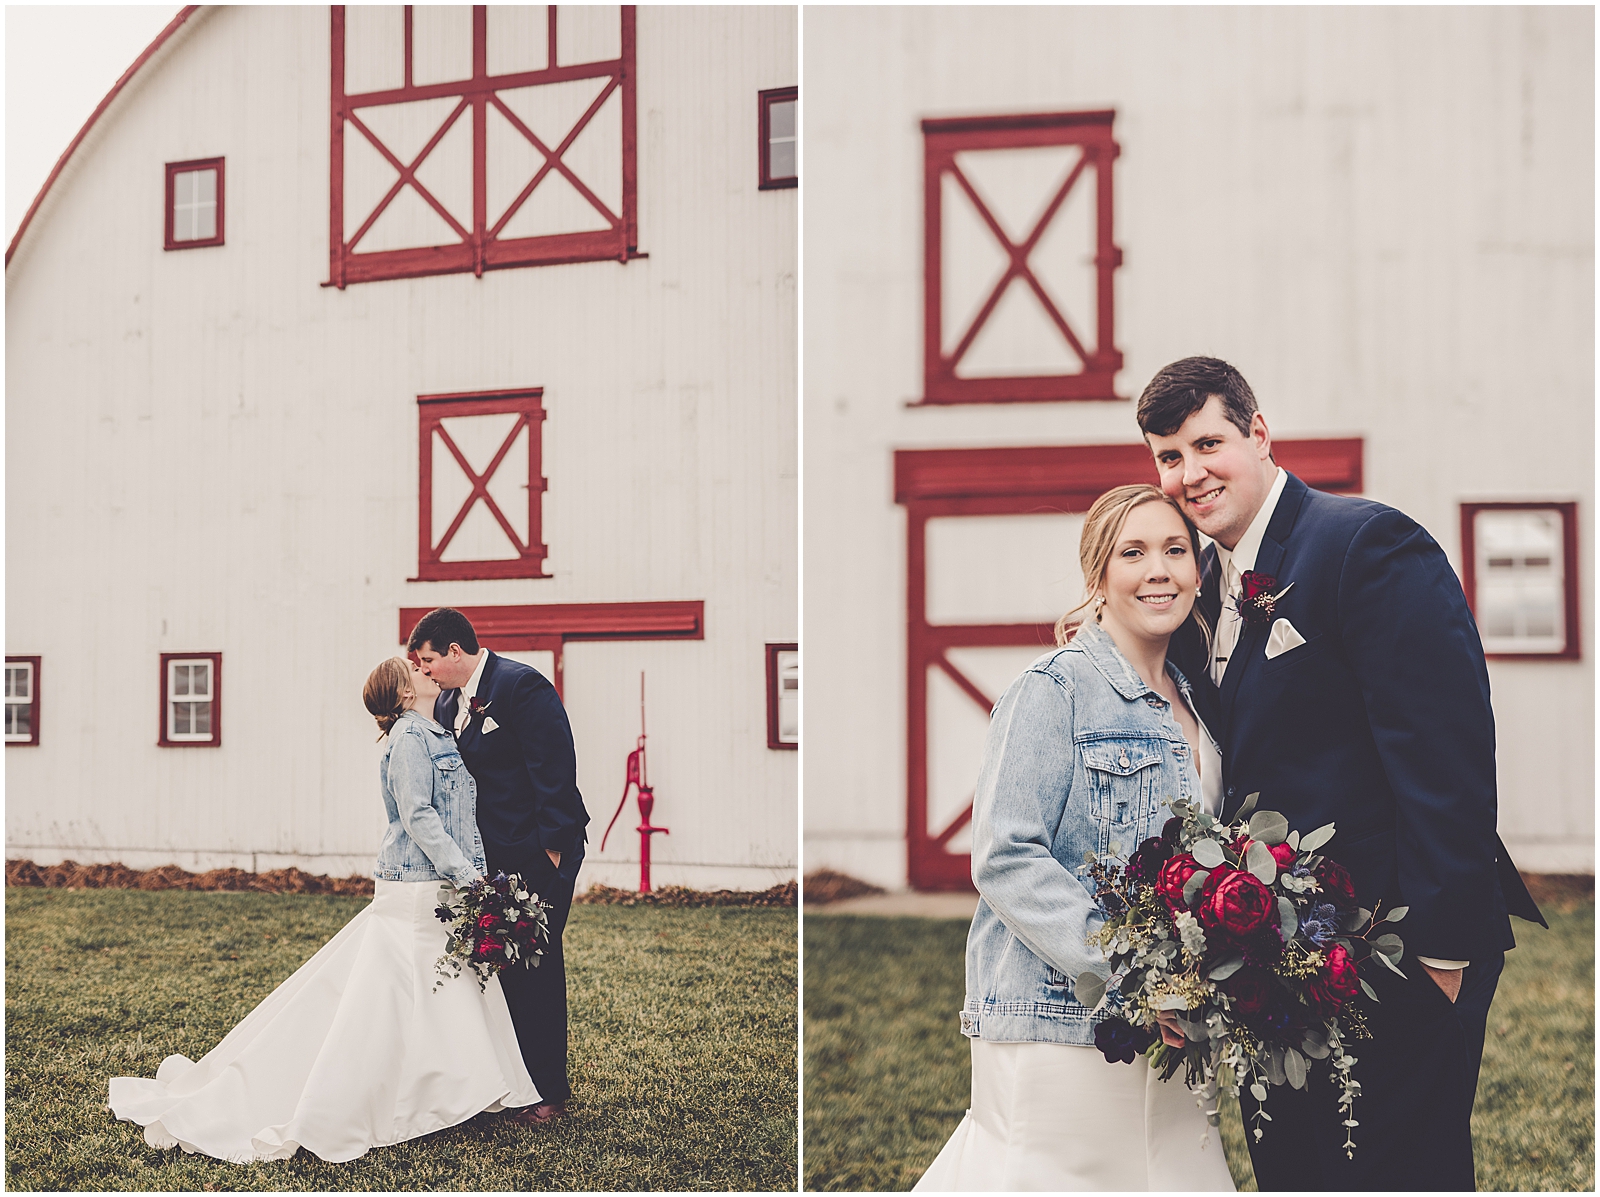 Katelynn & Jamey's winter Hudson Farm wedding day in Urbana, Illinois with Chicagoland wedding photographer Kara Evans Photographer.